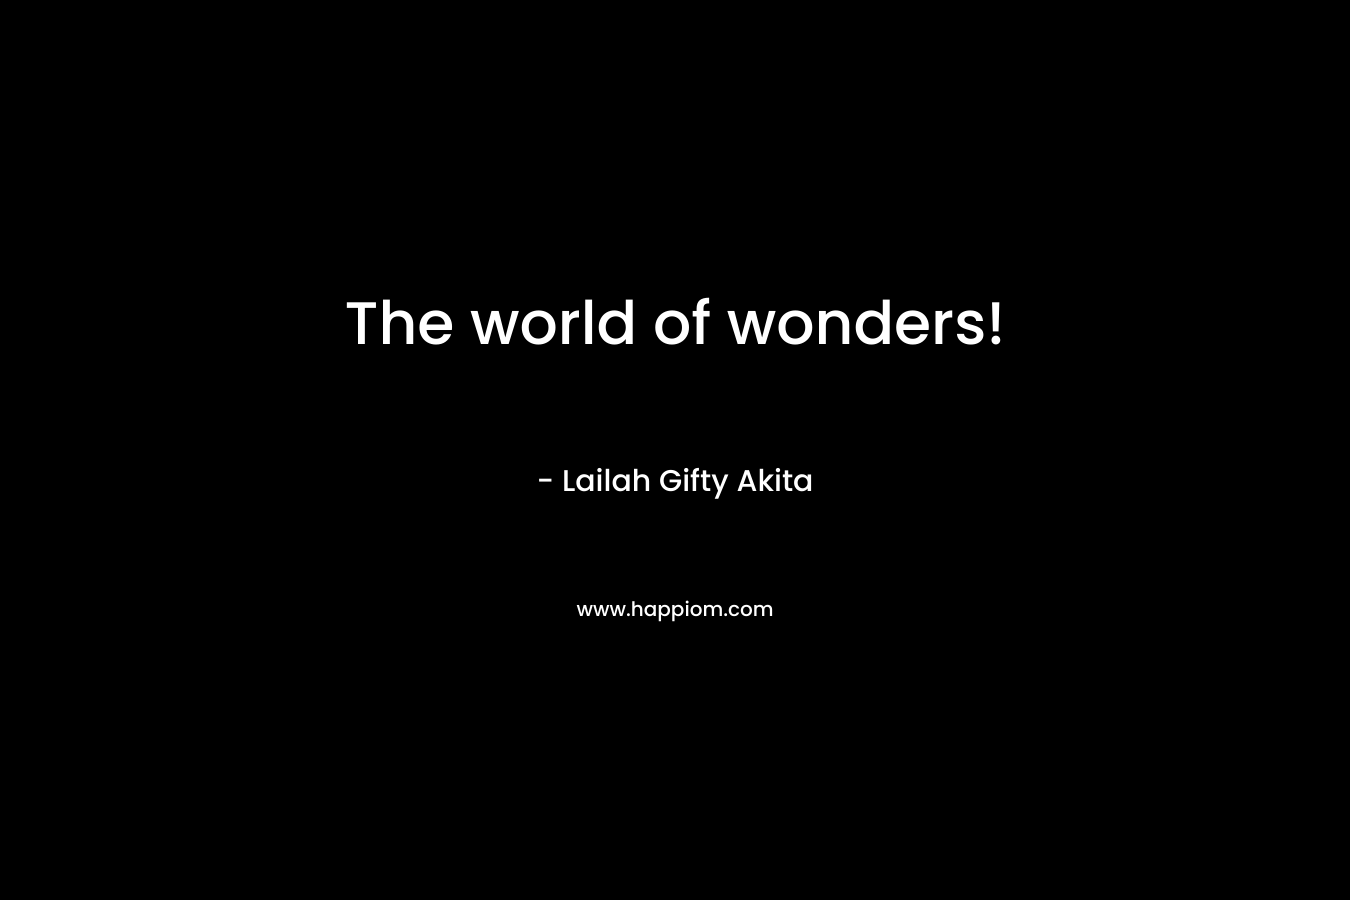 The world of wonders!